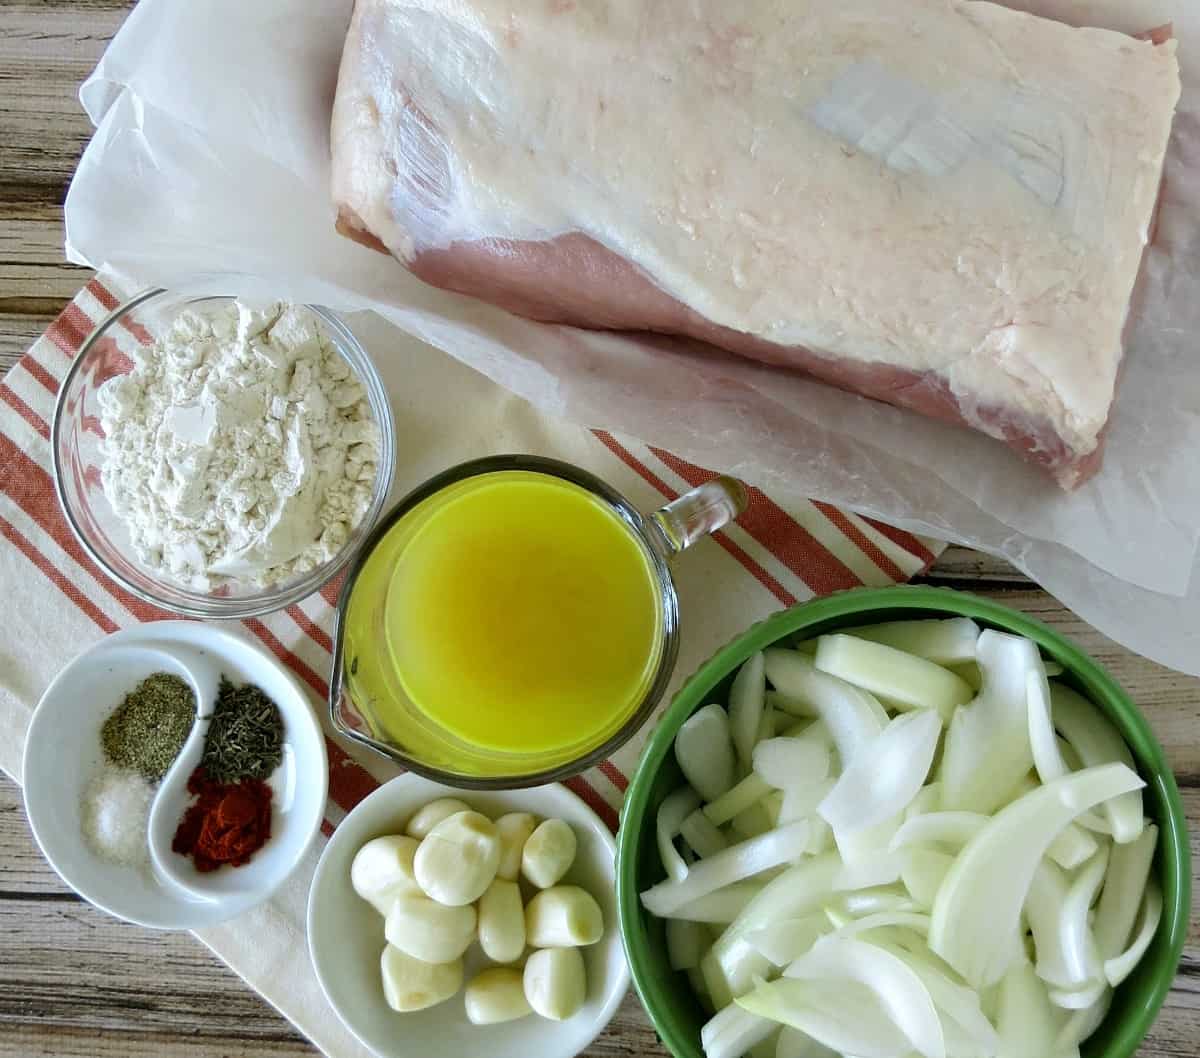 Savory Roasted Pork and Gravy - Ingredients